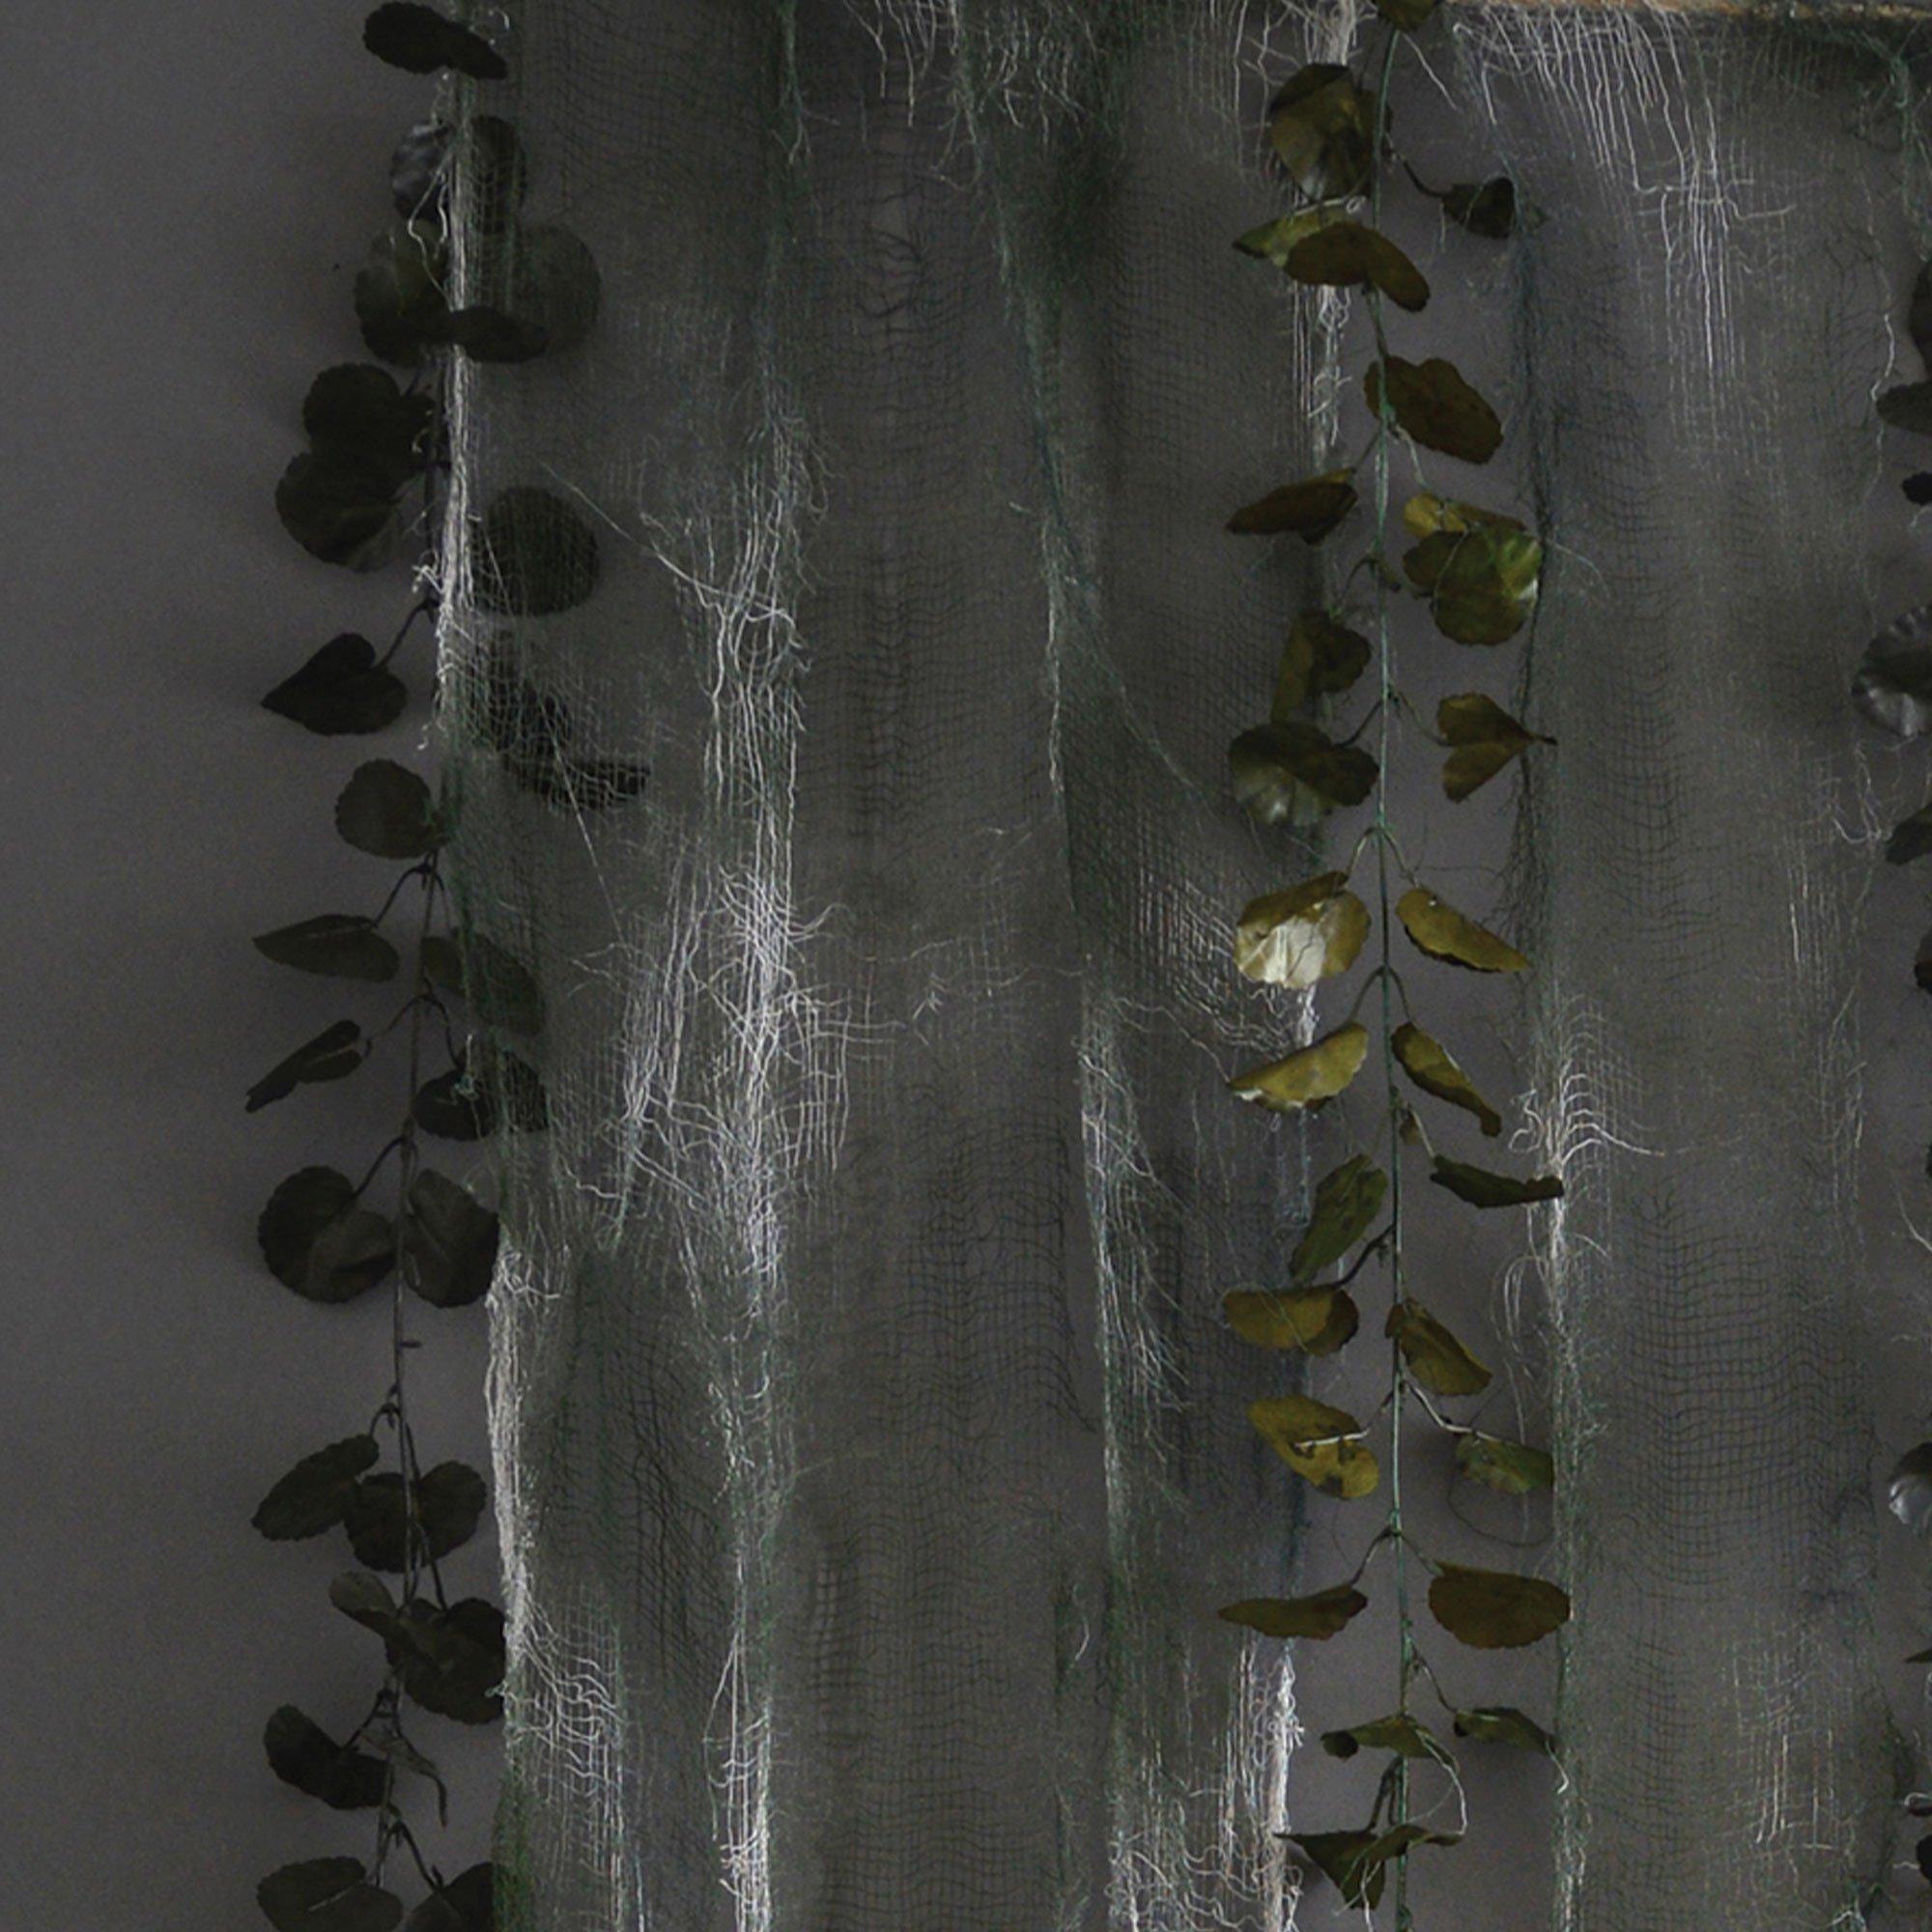 Mutated Forest Vine & Gauze Hanging Backdrop, 5ft x 6ft